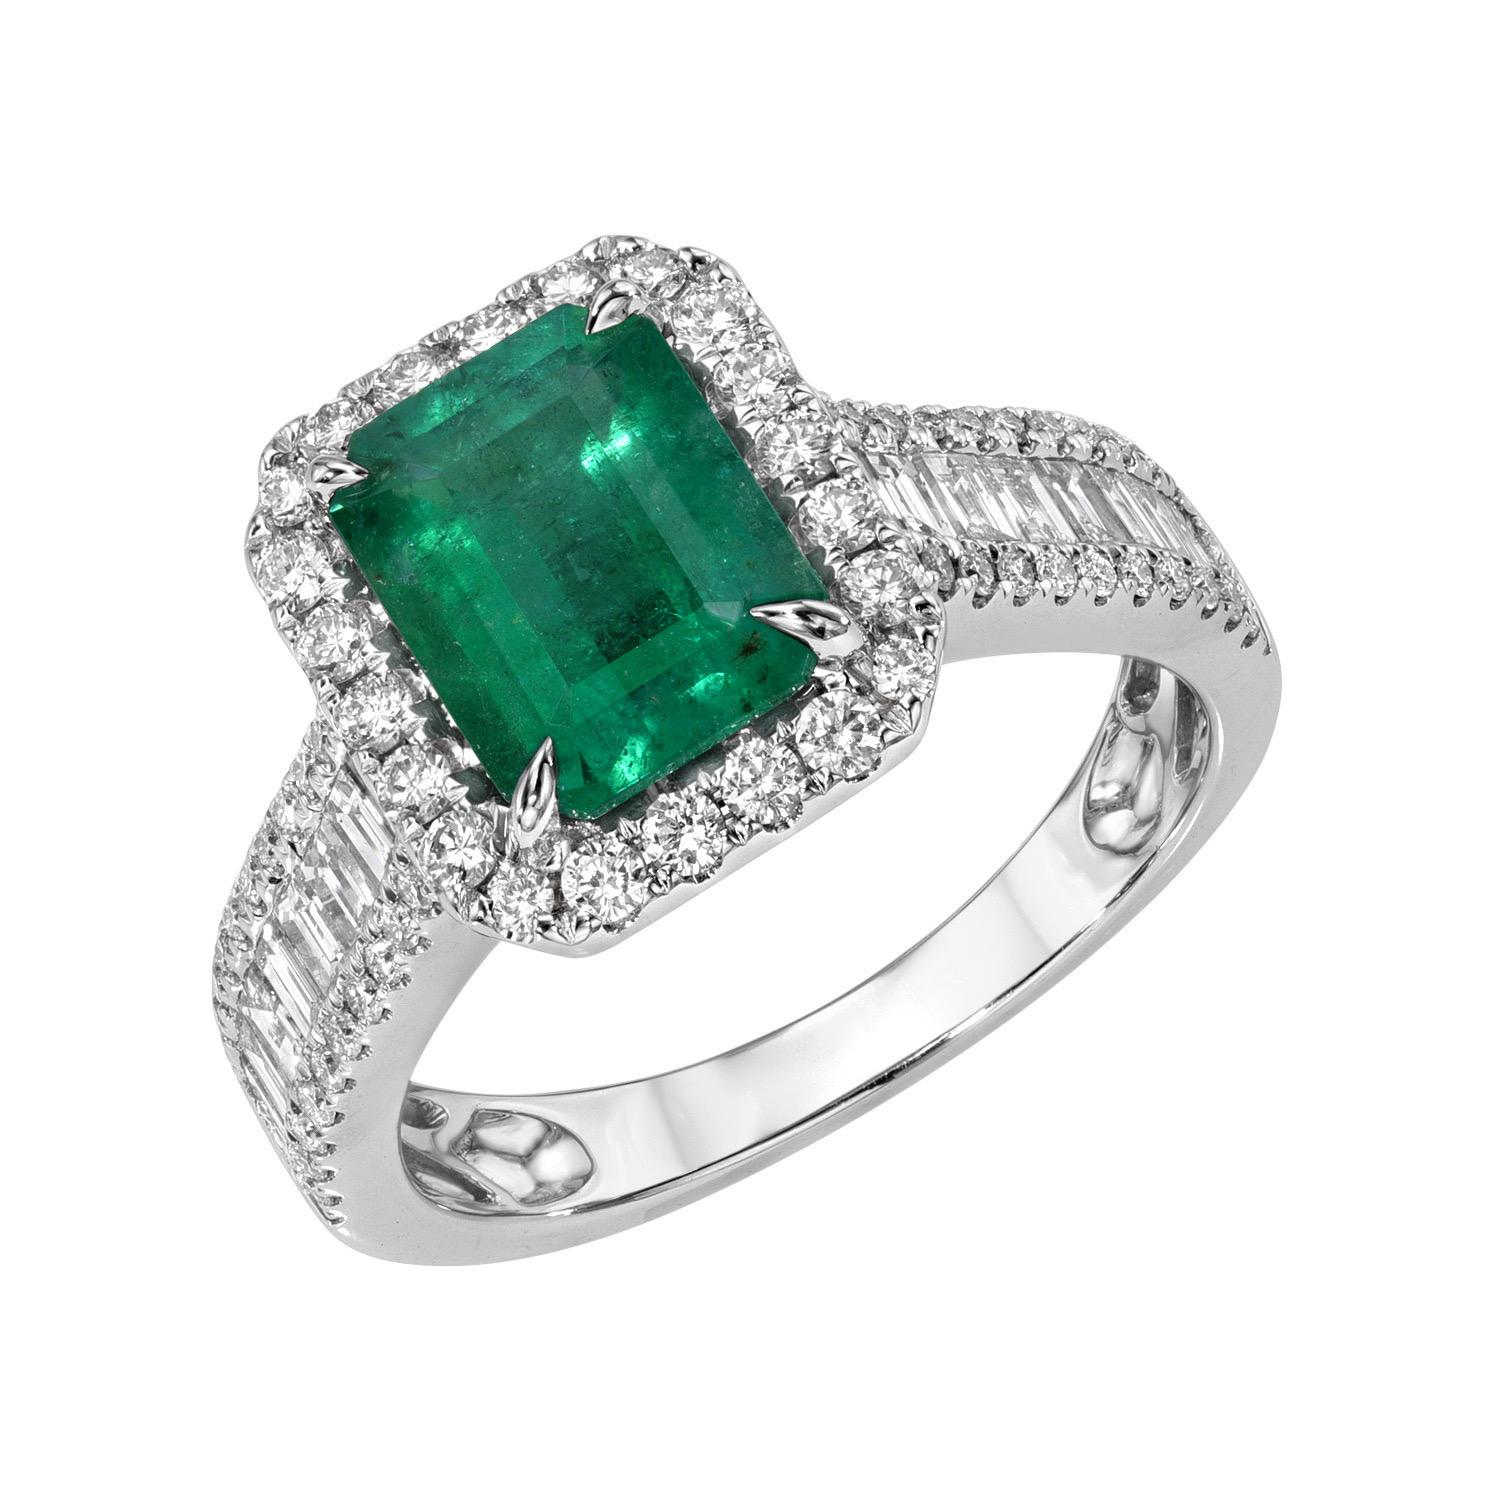 Contemporary Emerald Ring 1.96 Carat Emerald Cut For Sale